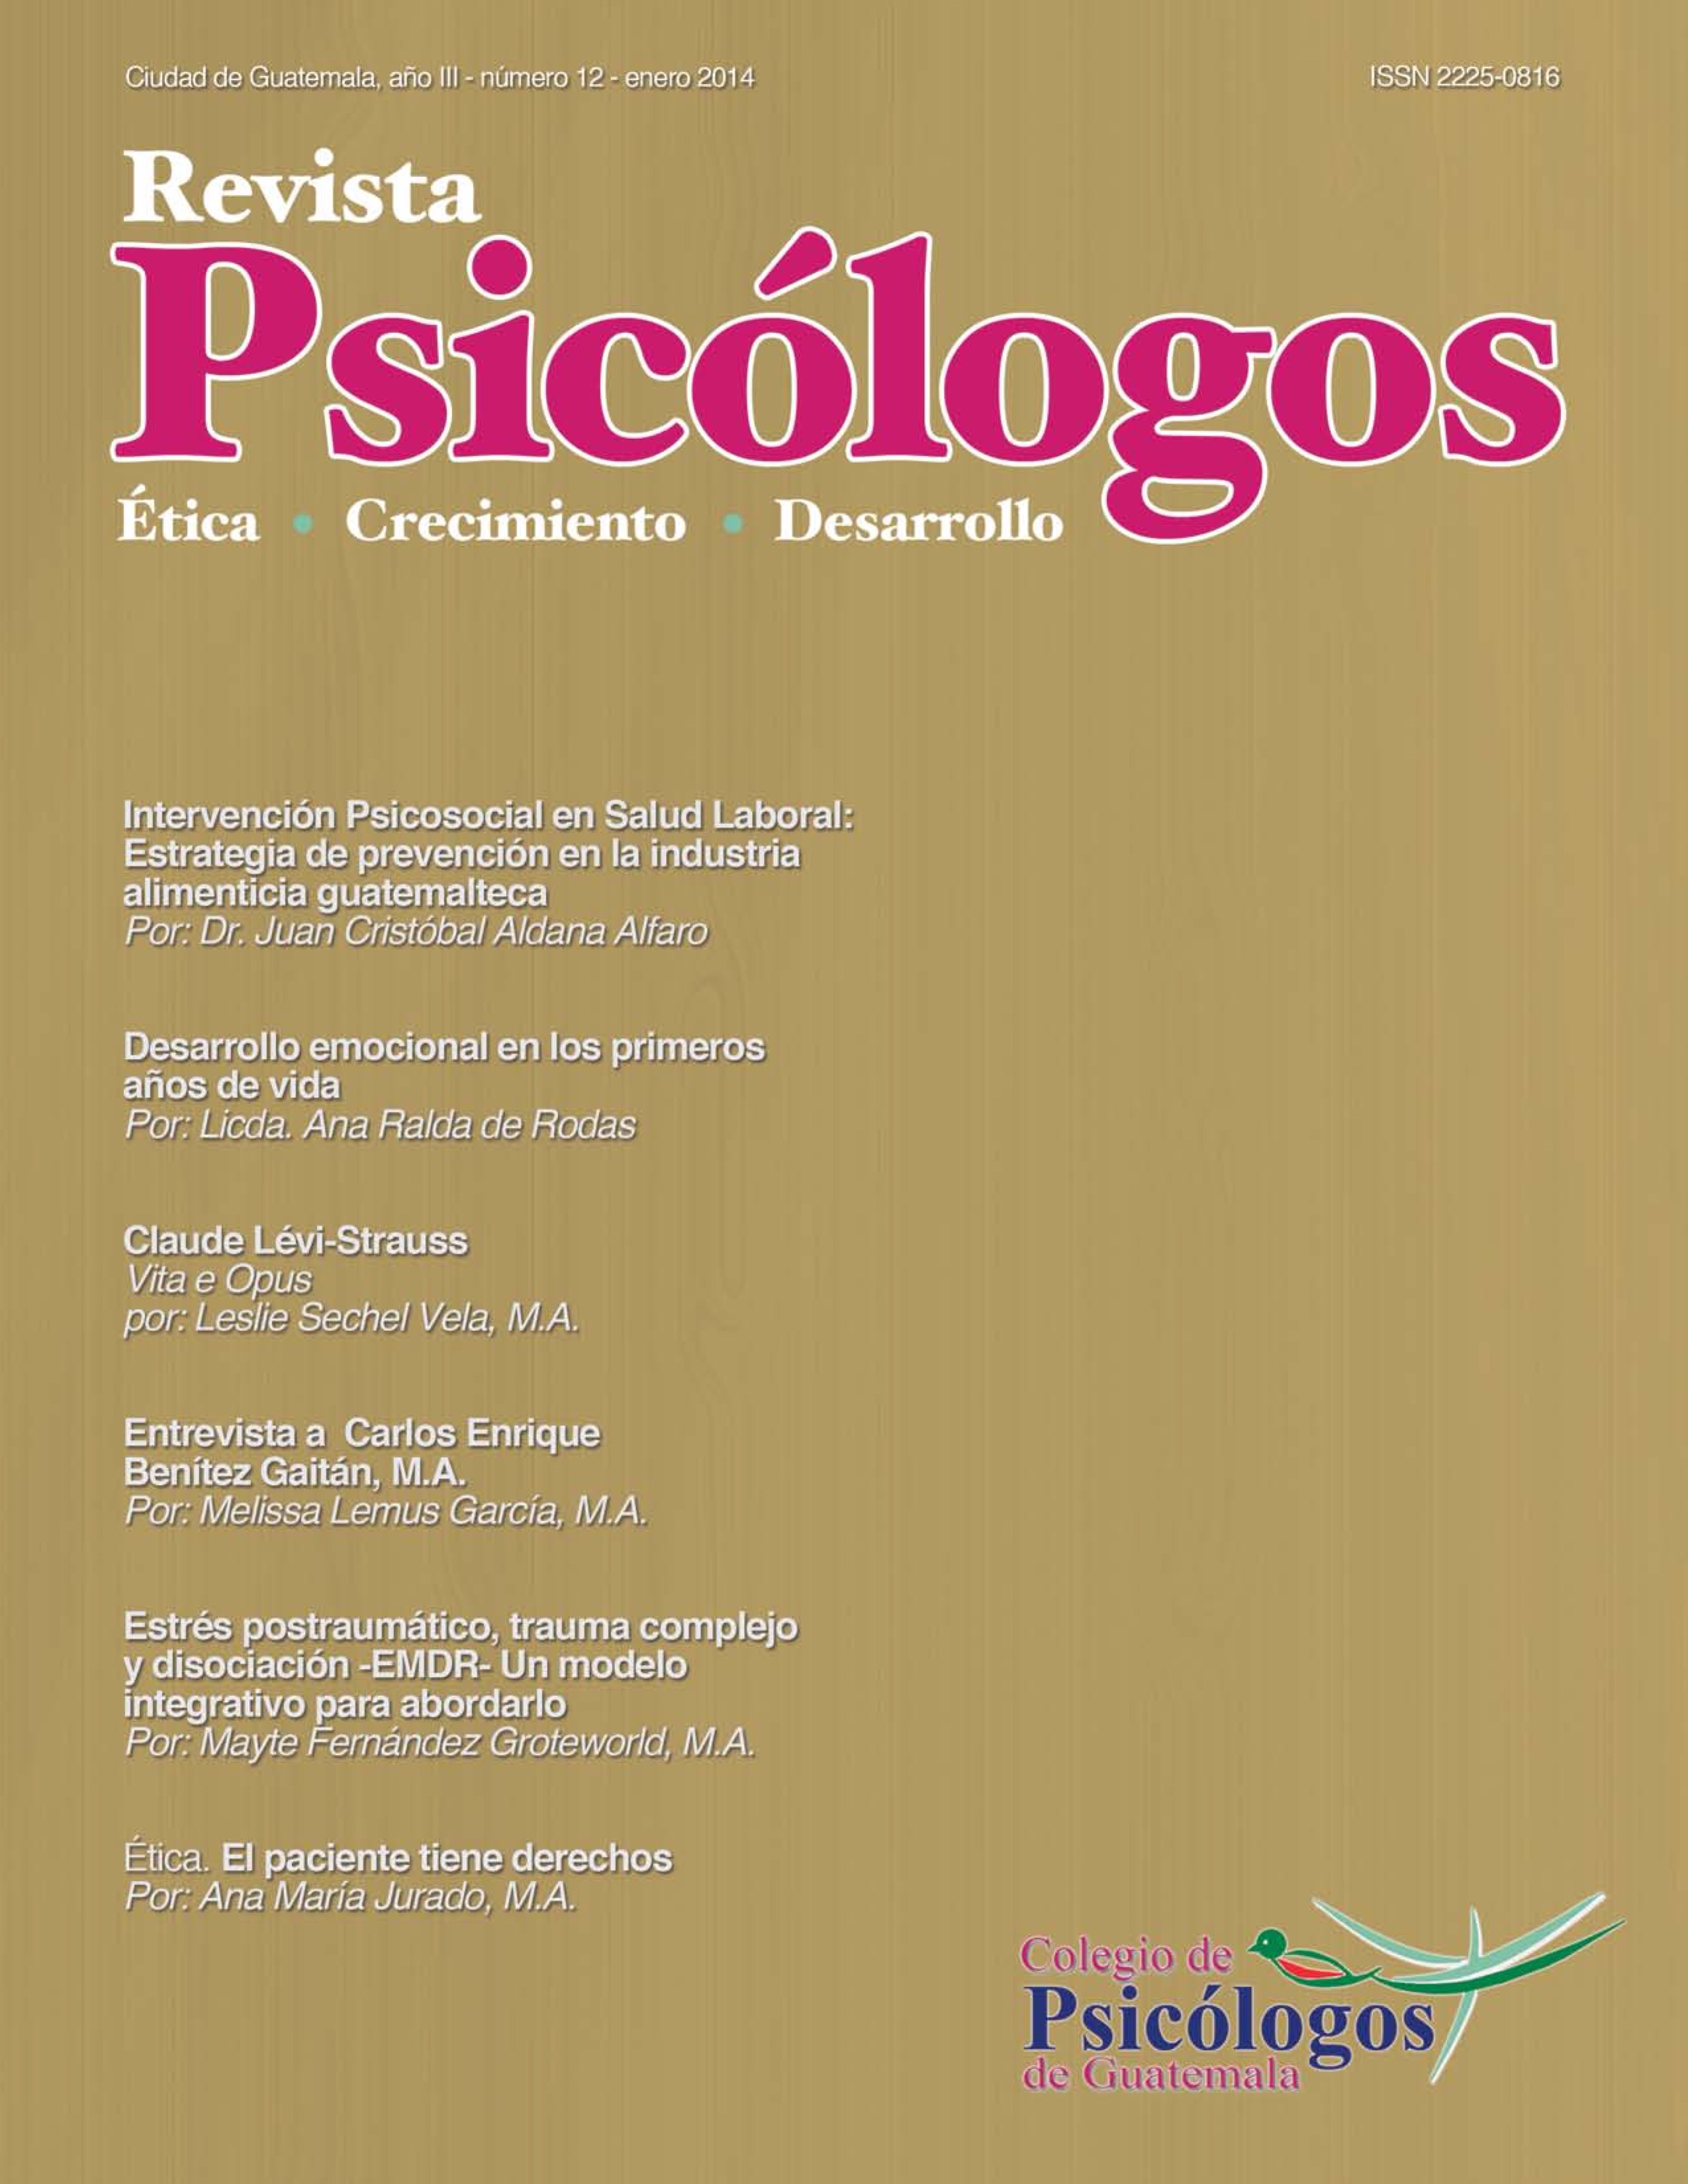 					Ver Vol. 3 Núm. 12 (2014): Revista Psicólogos No. 12
				